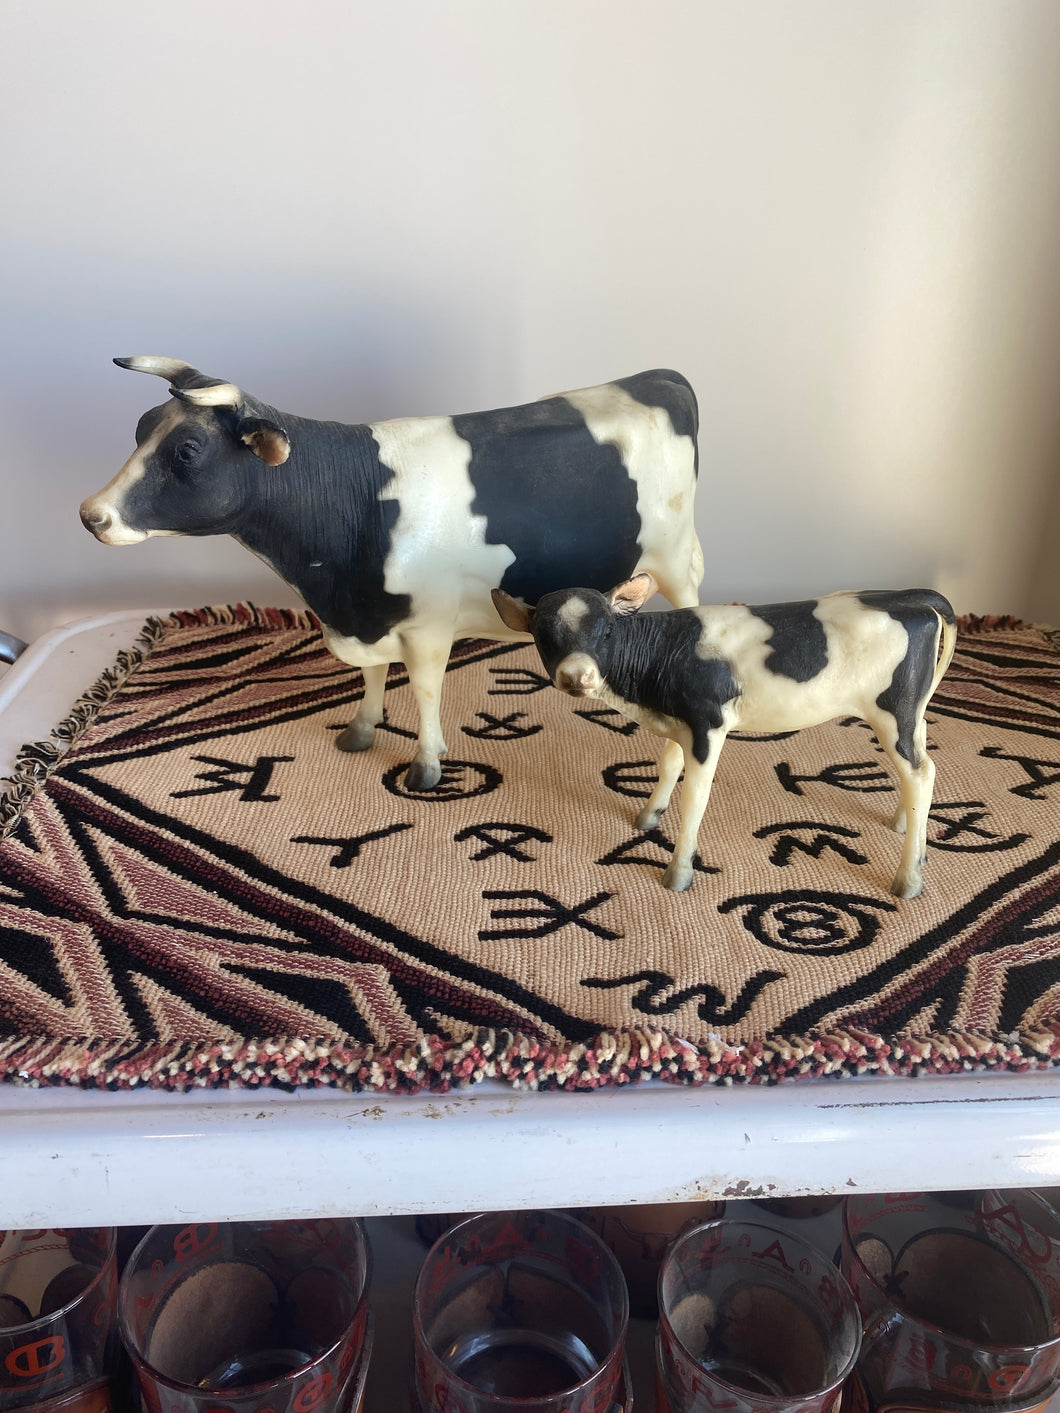 Holstein Breyer Dairy Cow and Calf